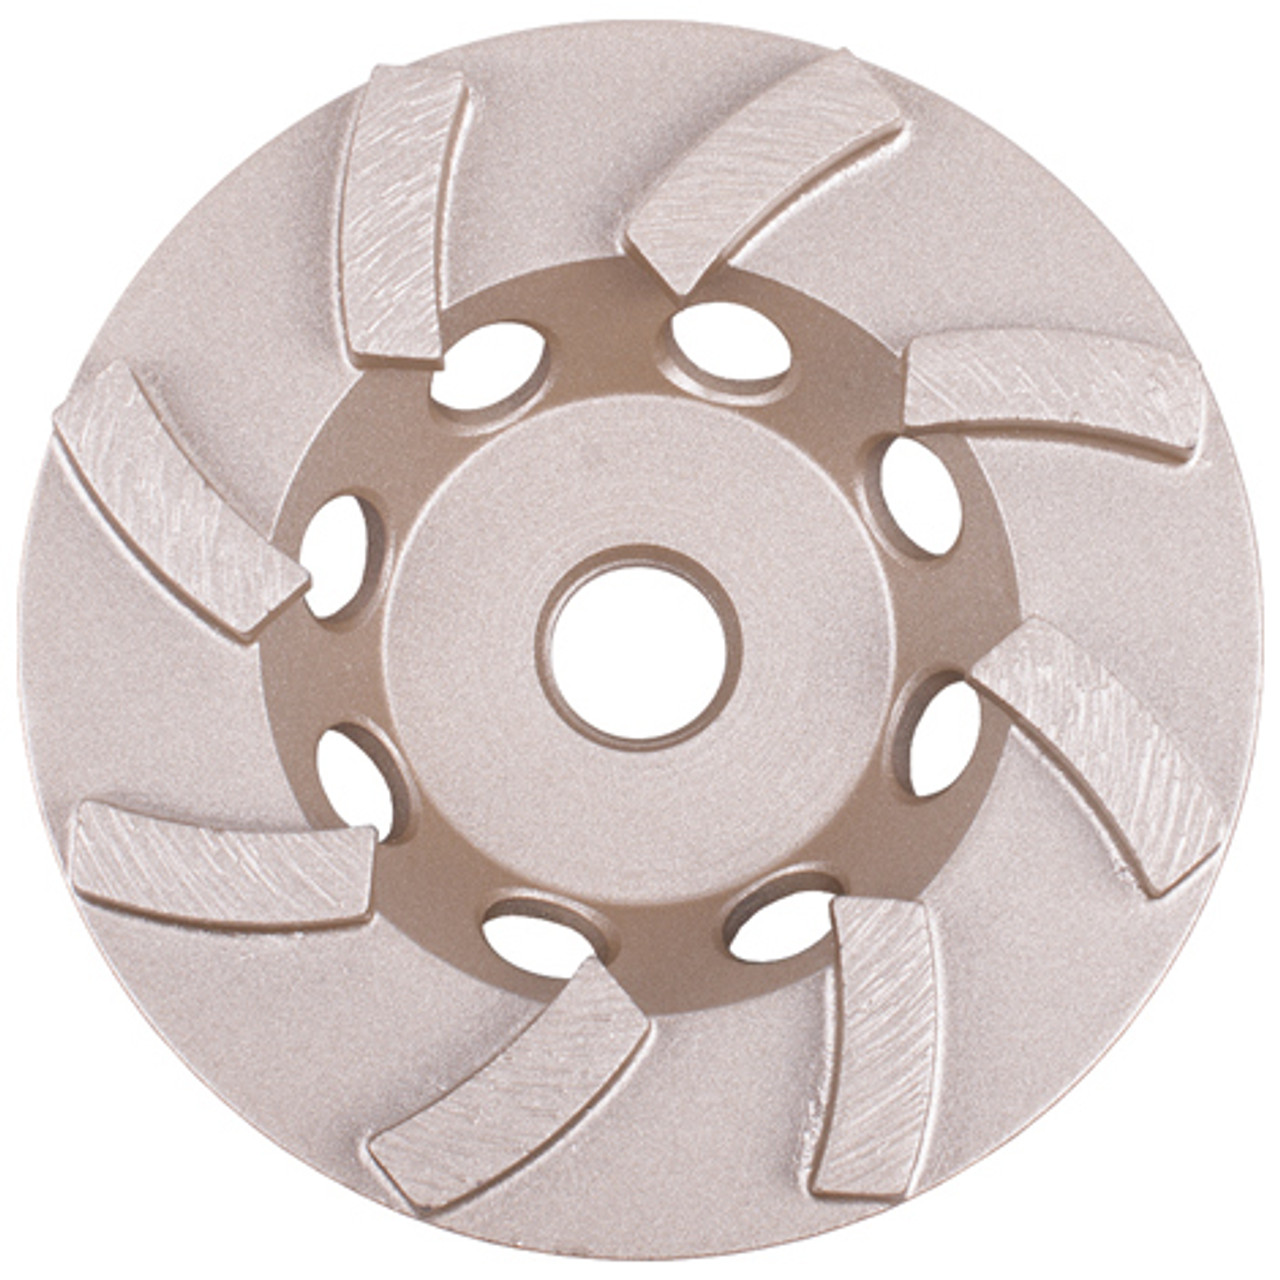 Diamond Vantage 5 x 7/8-5/8 inch Turbo Single Cup Wheel, X1 Standard Grade